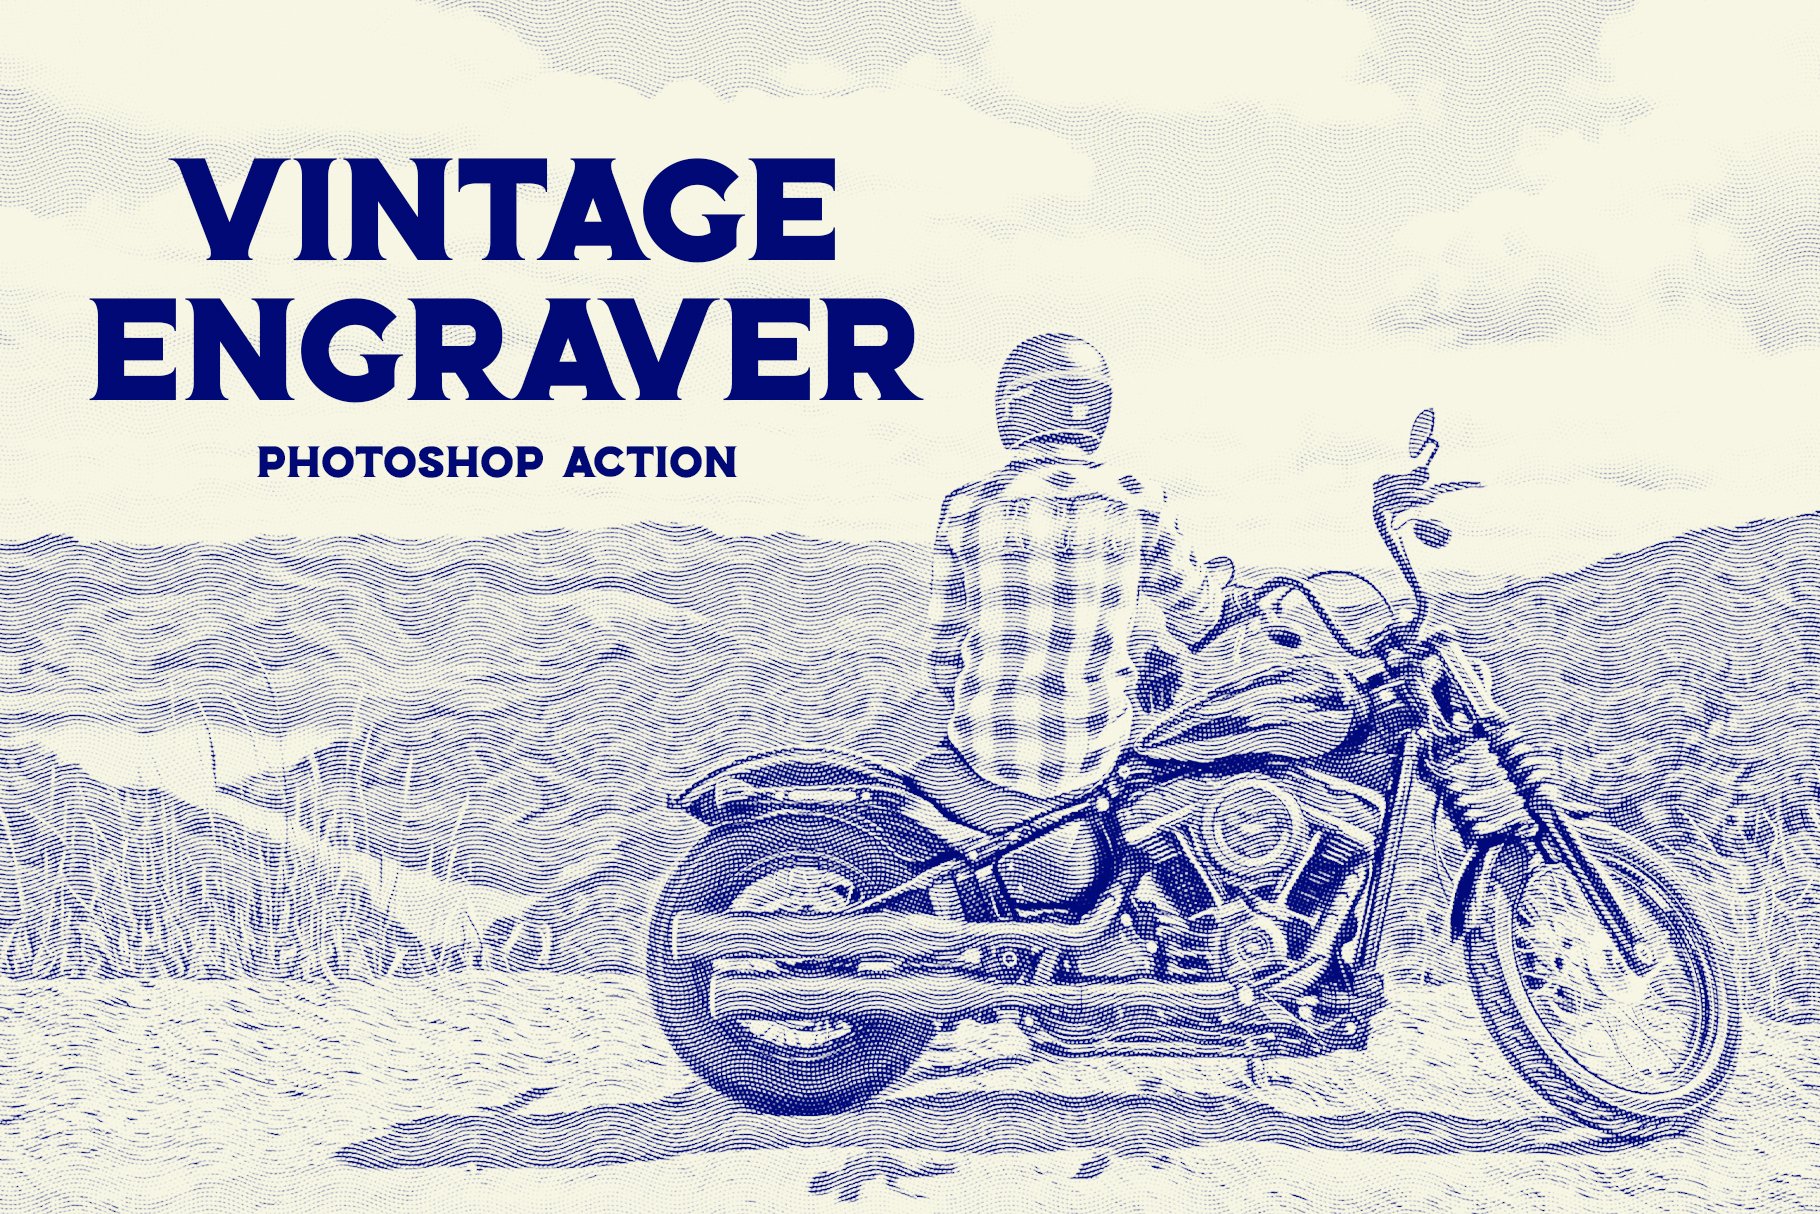 Vintage Engraver - Photoshop Actioncover image.